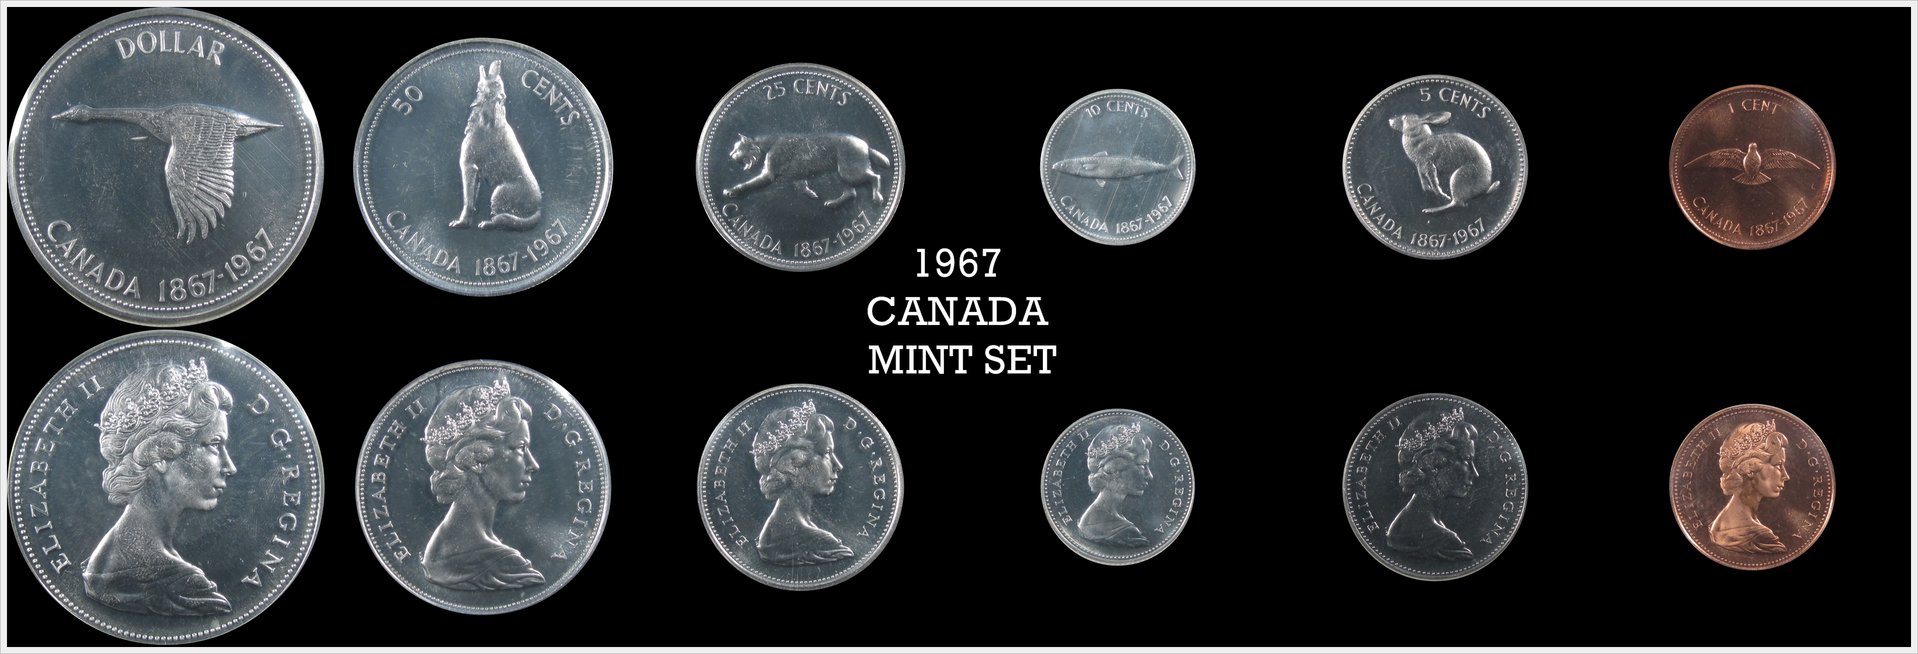 1967 Canada Mint Set.jpg